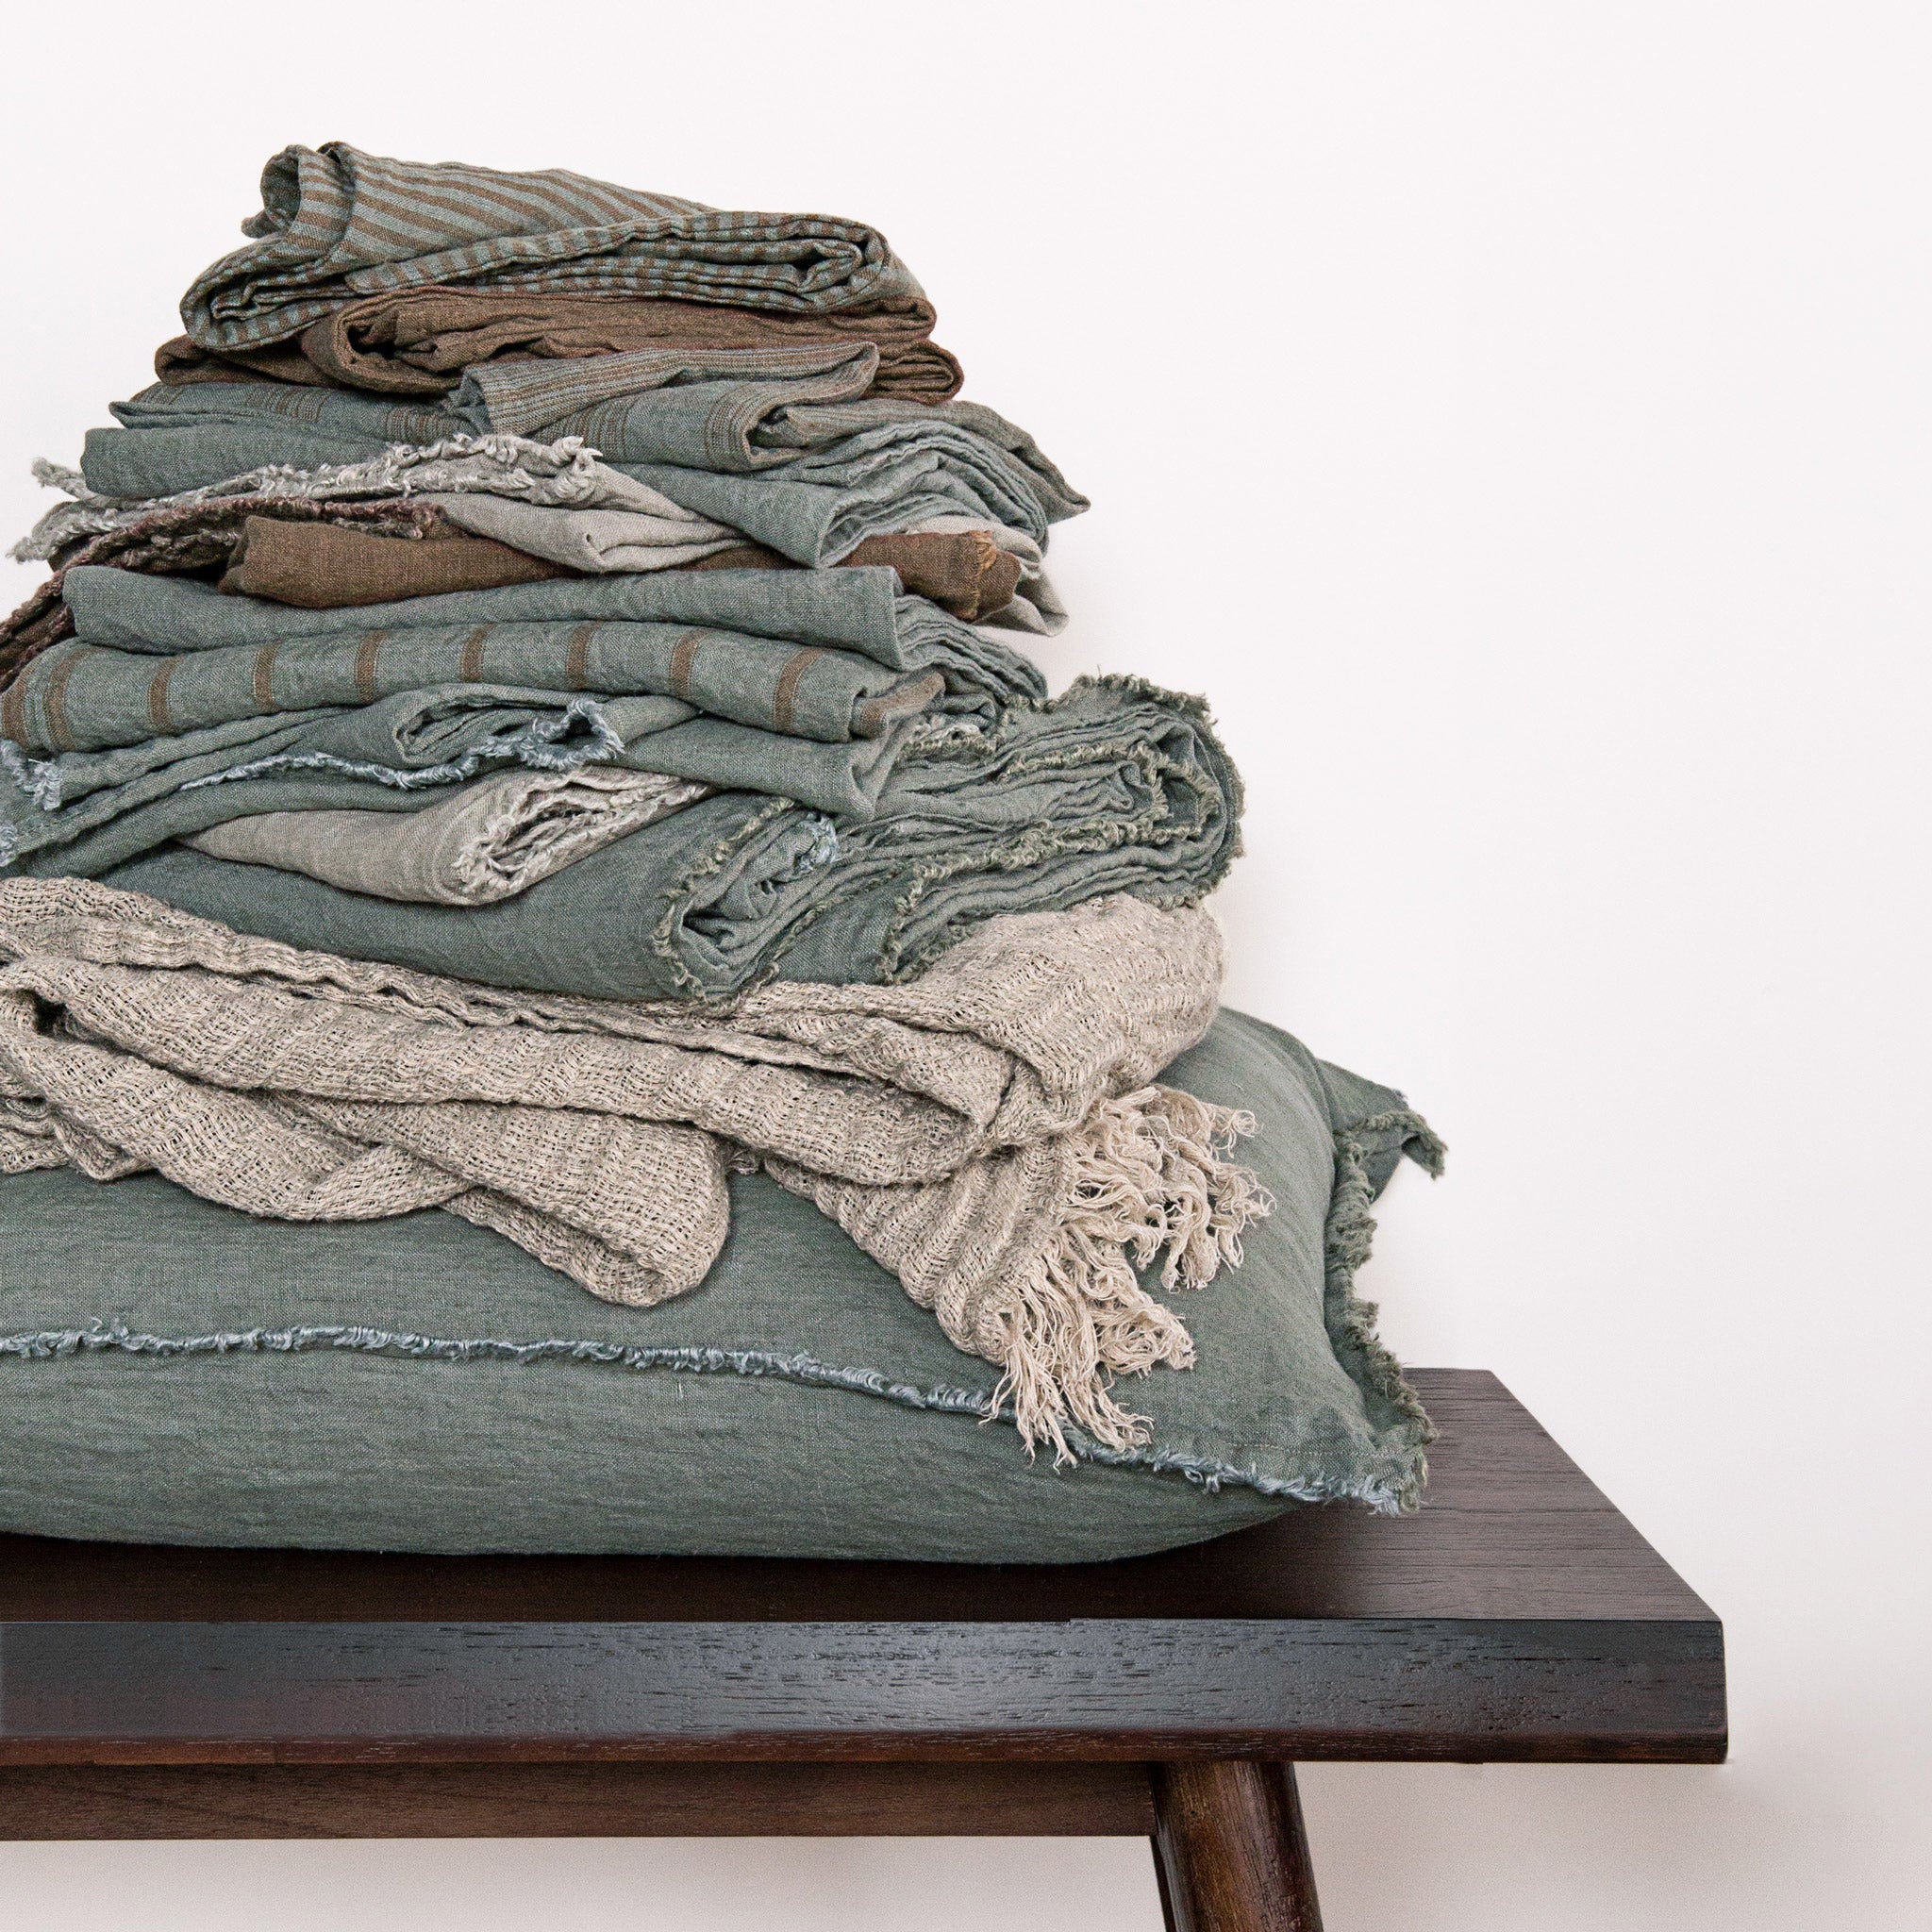 Flocca Linen Pillowcase | Oceanic Green Blue | Hale Mercantile Co.